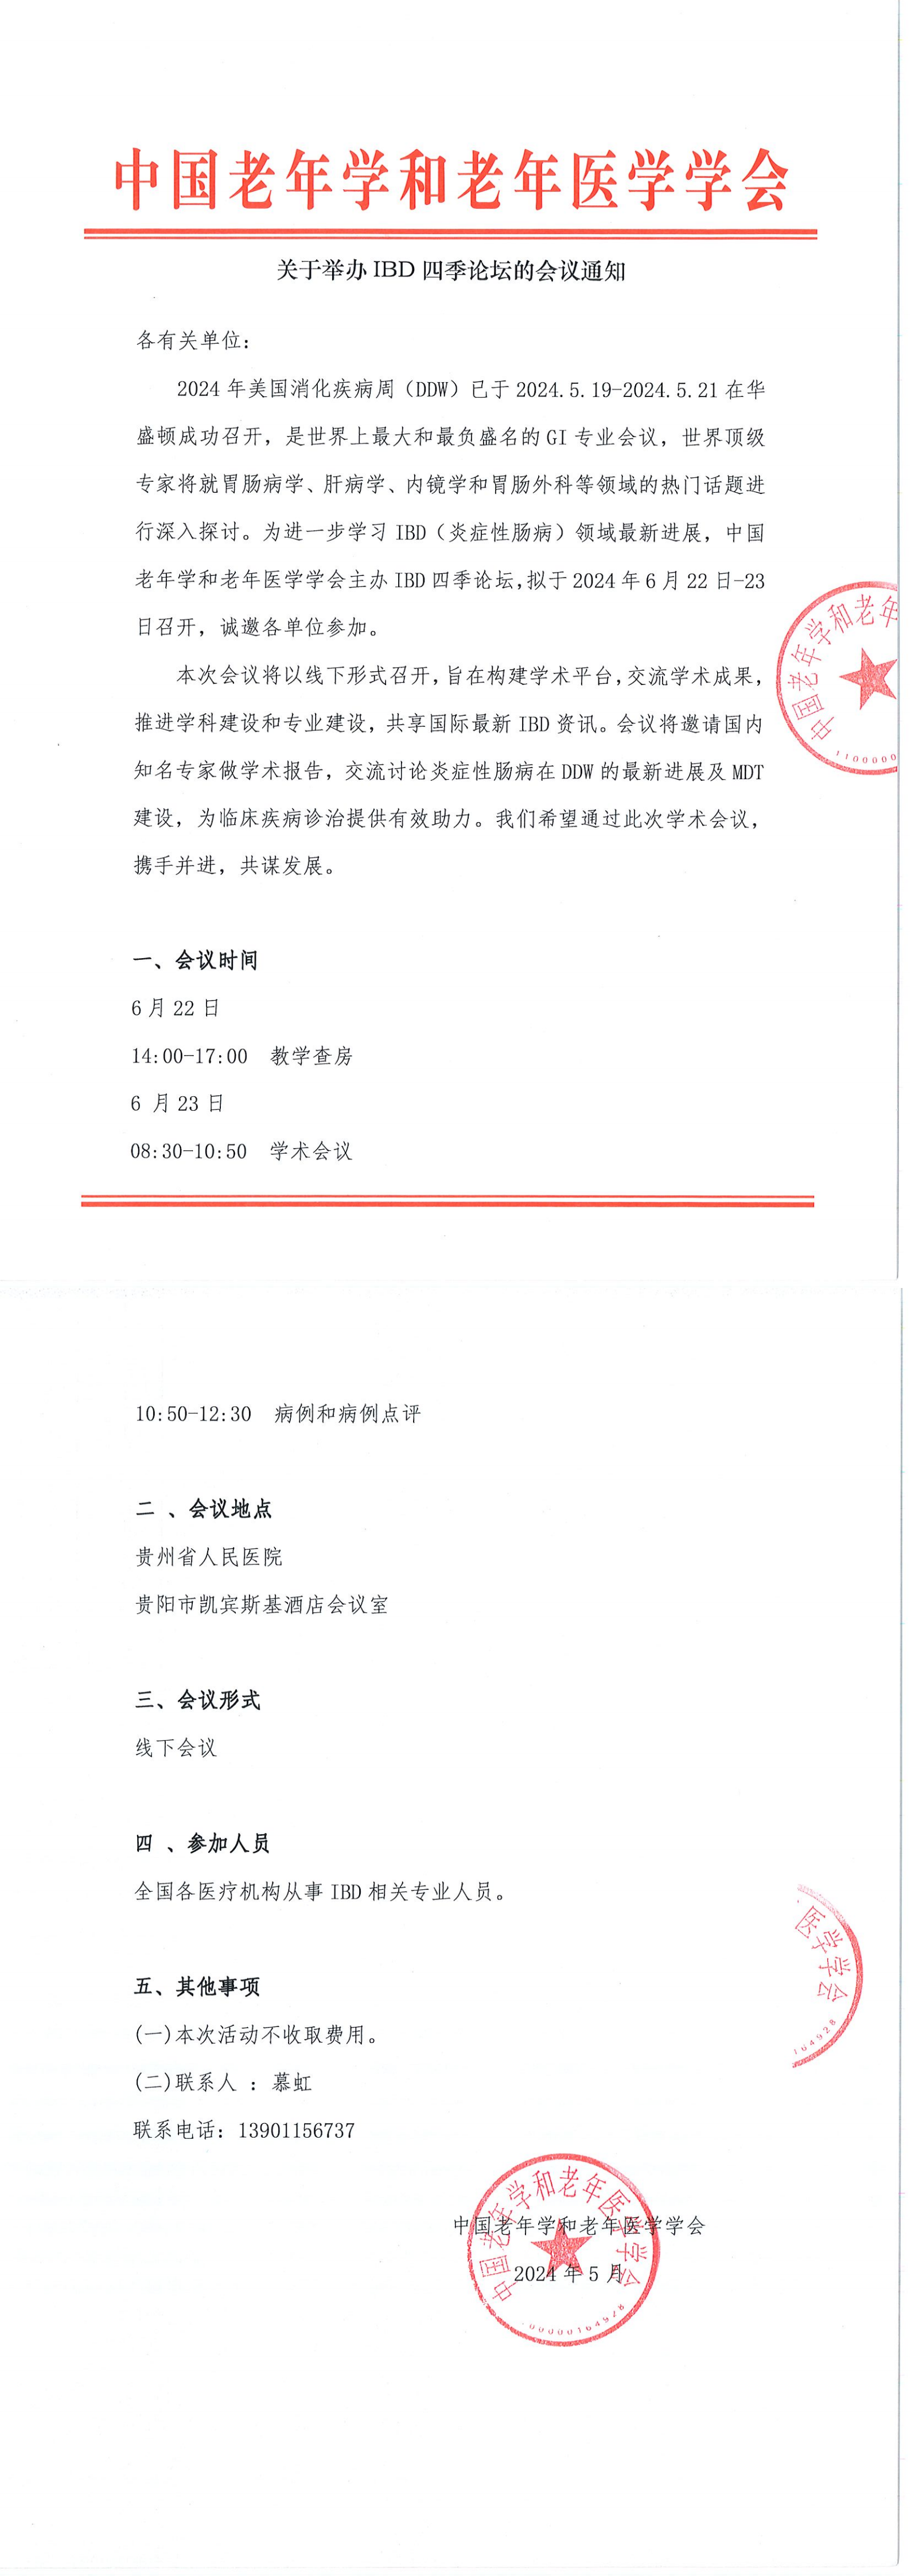 IBD四季论坛-会议通知_00.png